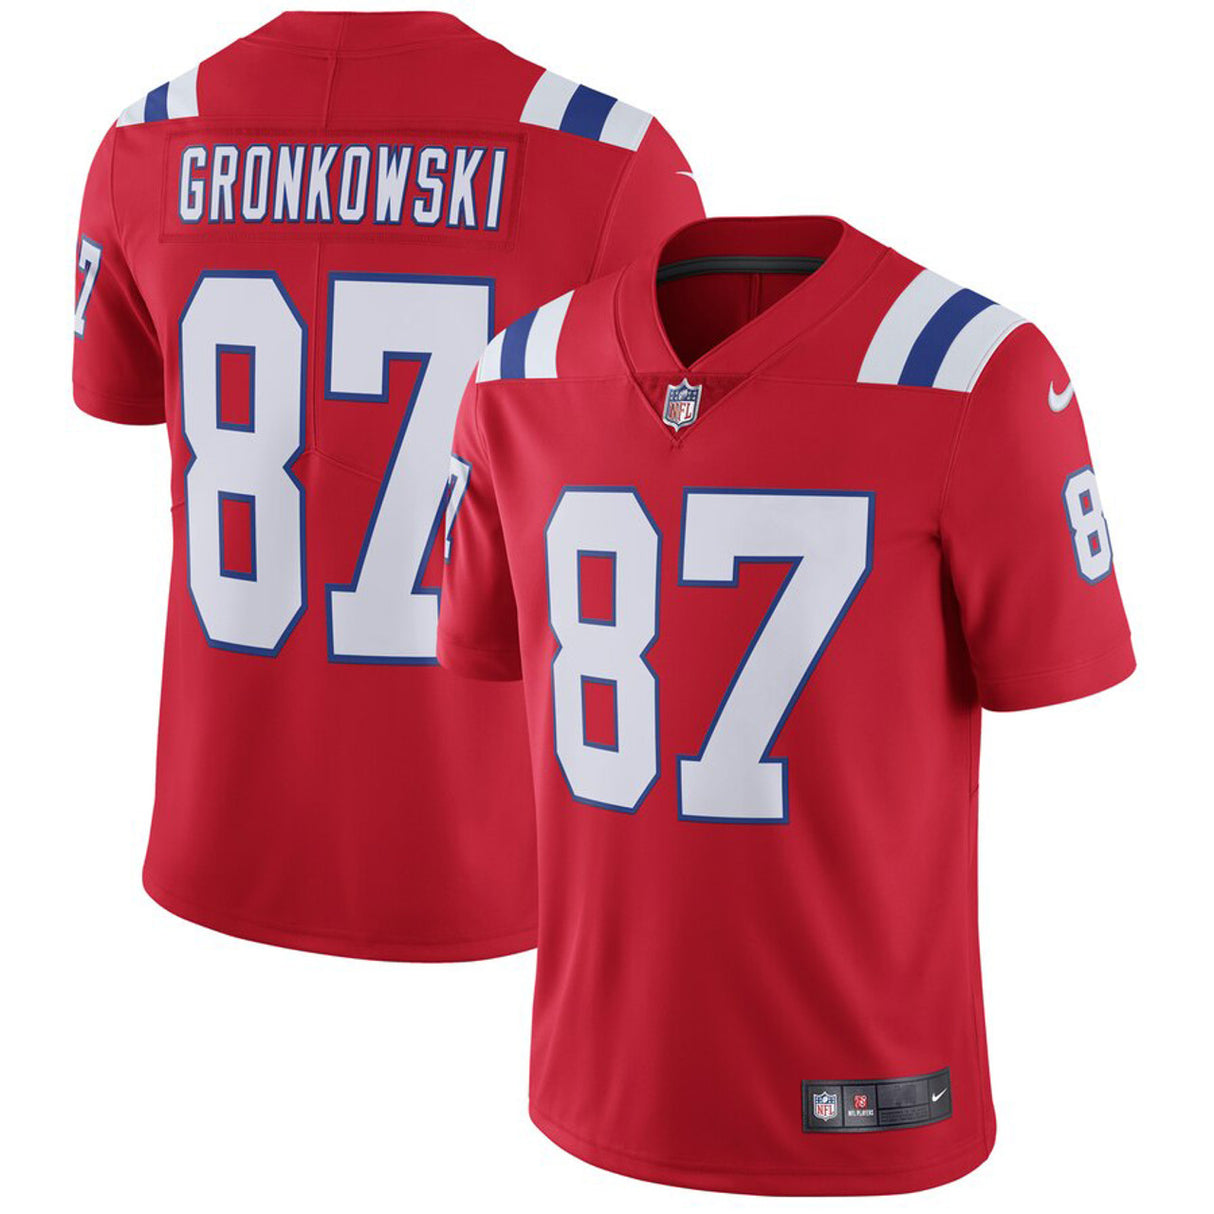 Patriots Gronkowski Nike Adult Player Jersey